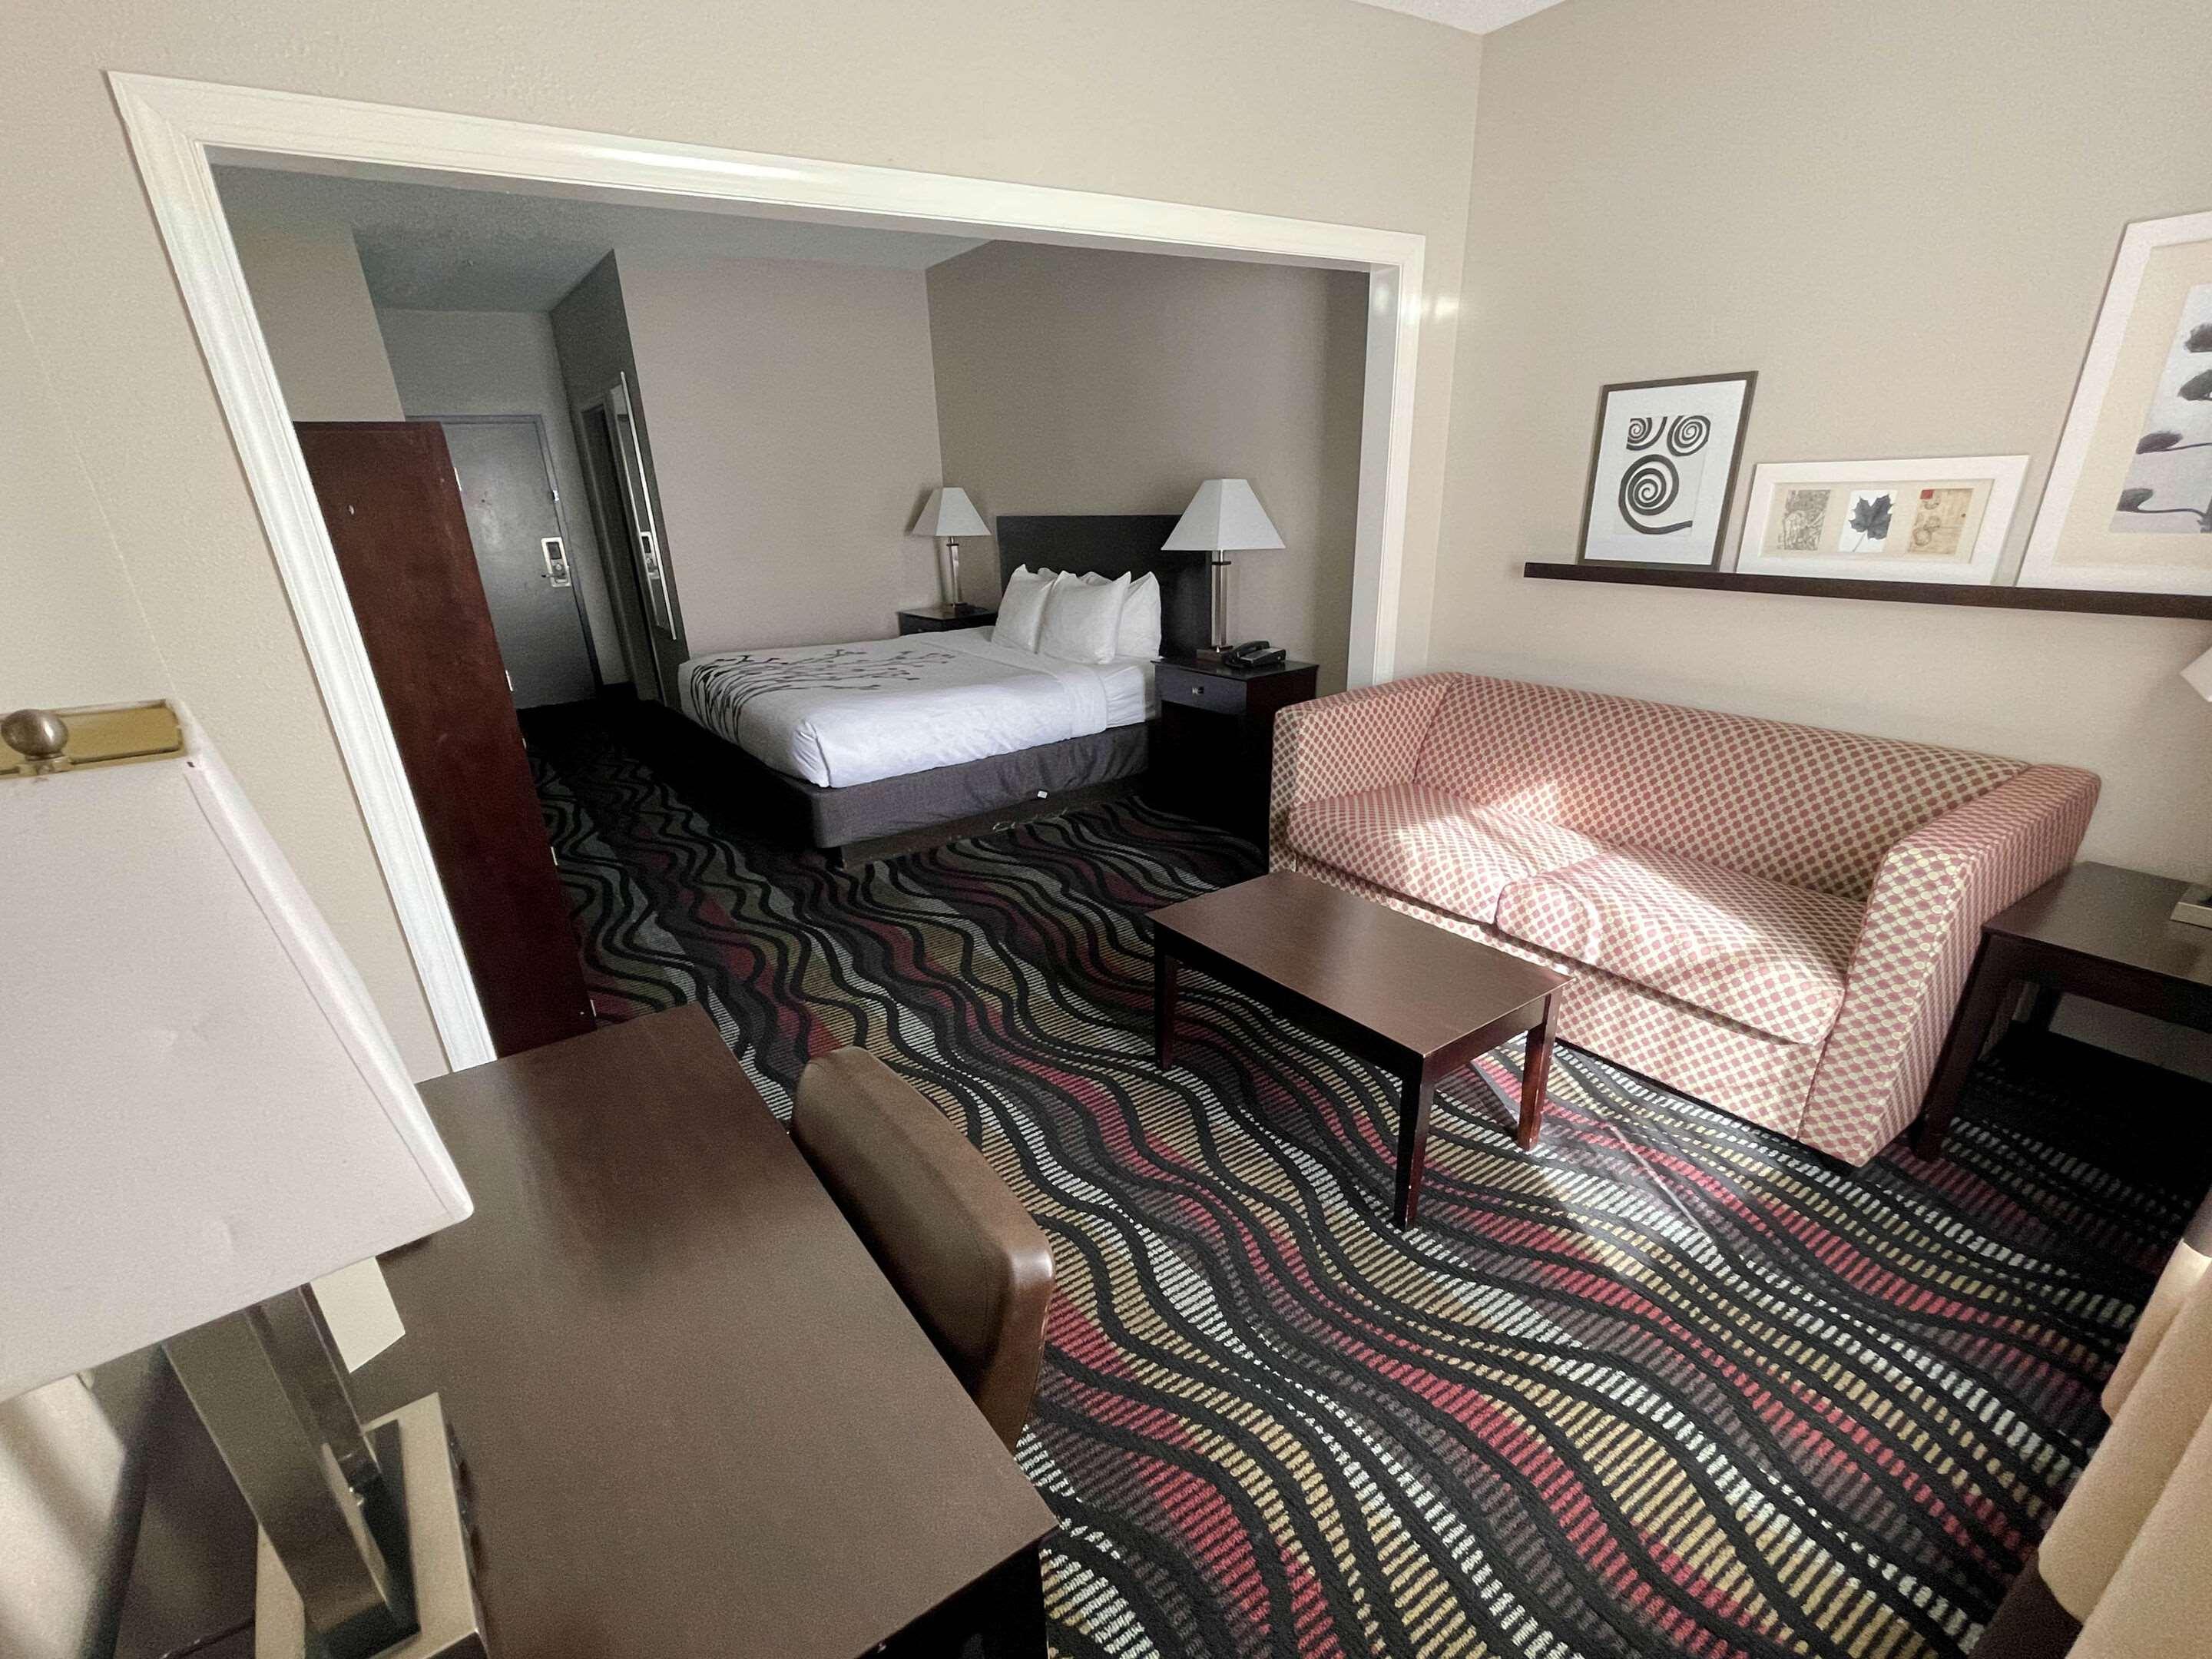 Country Inn & Suites by Radisson, Birmingham-Hoover, AL